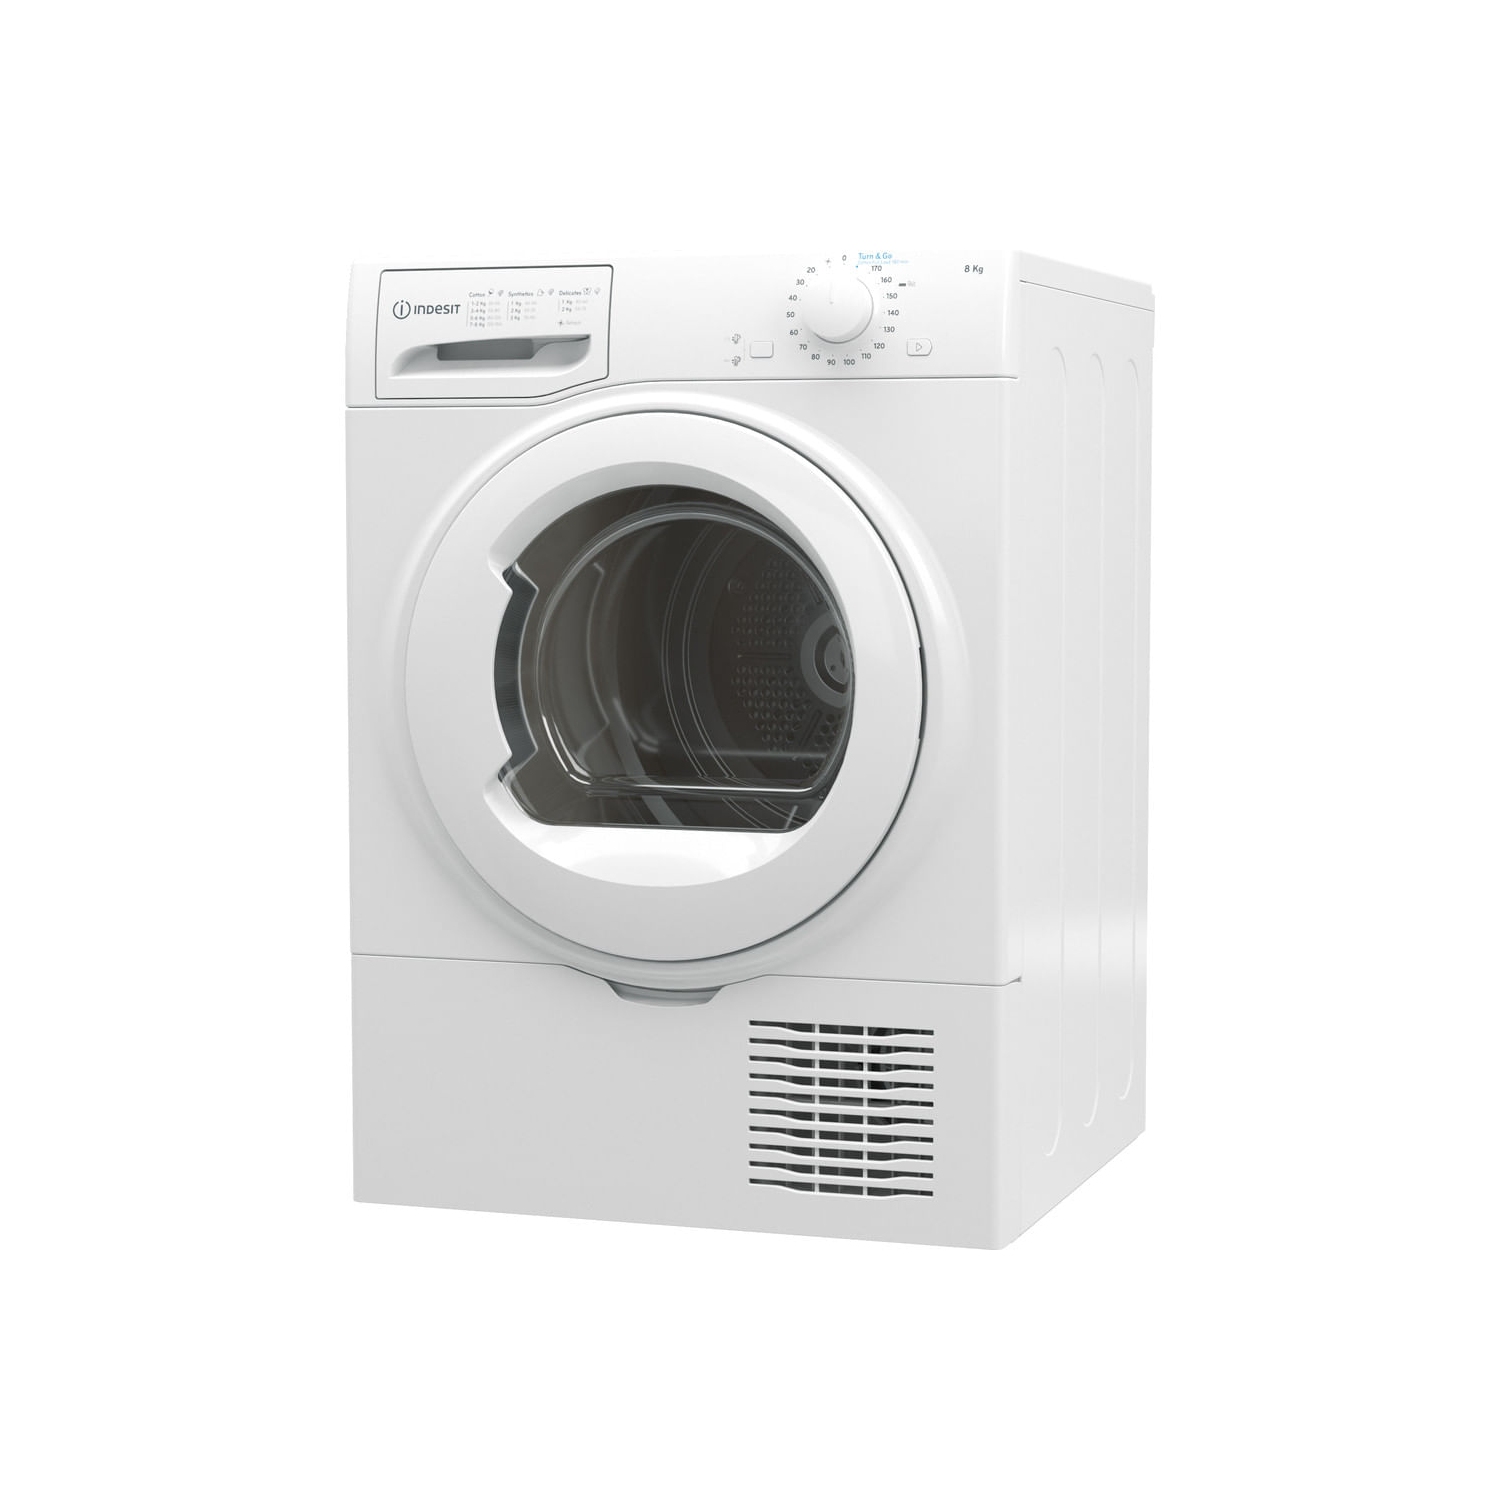 Indesit I2D81WUK 8Kg Condenser Tumble Dryer - White - 0